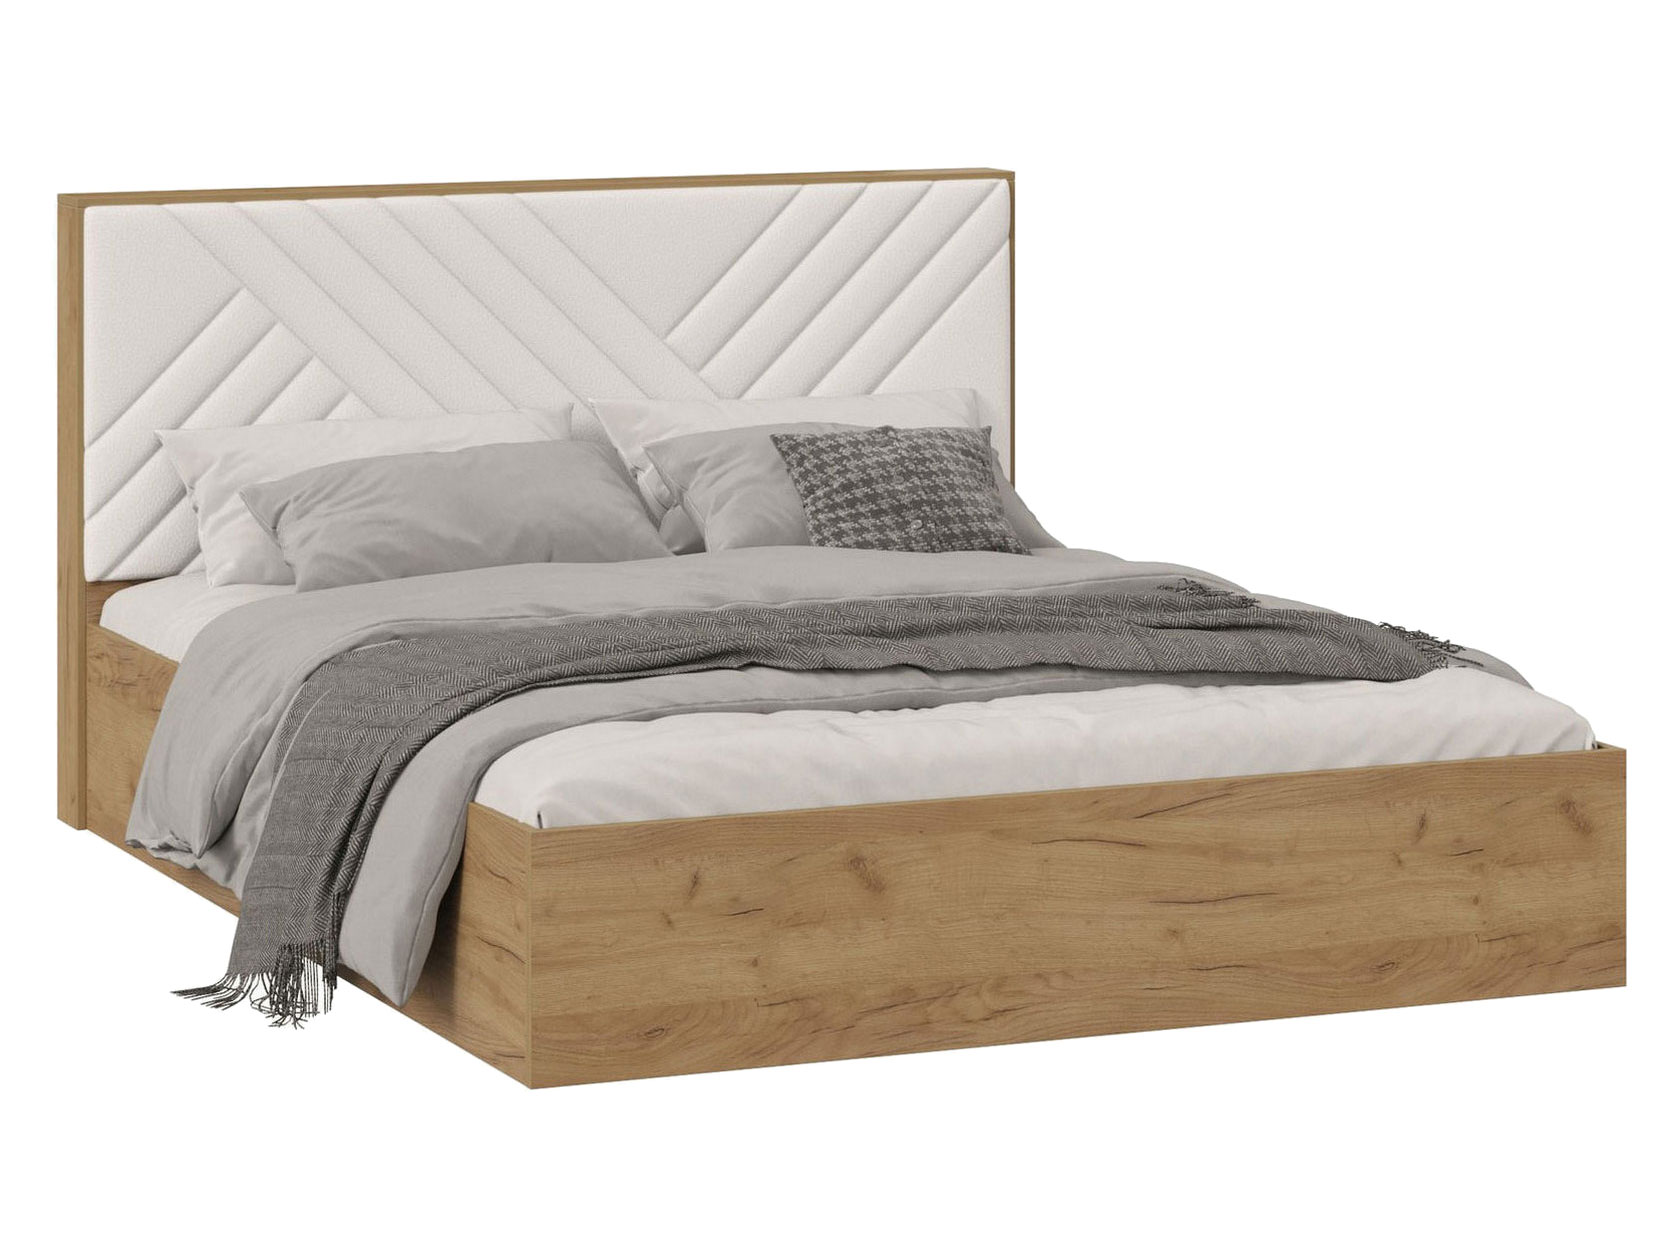 Особенности окрашивания кровати в домашних условиях